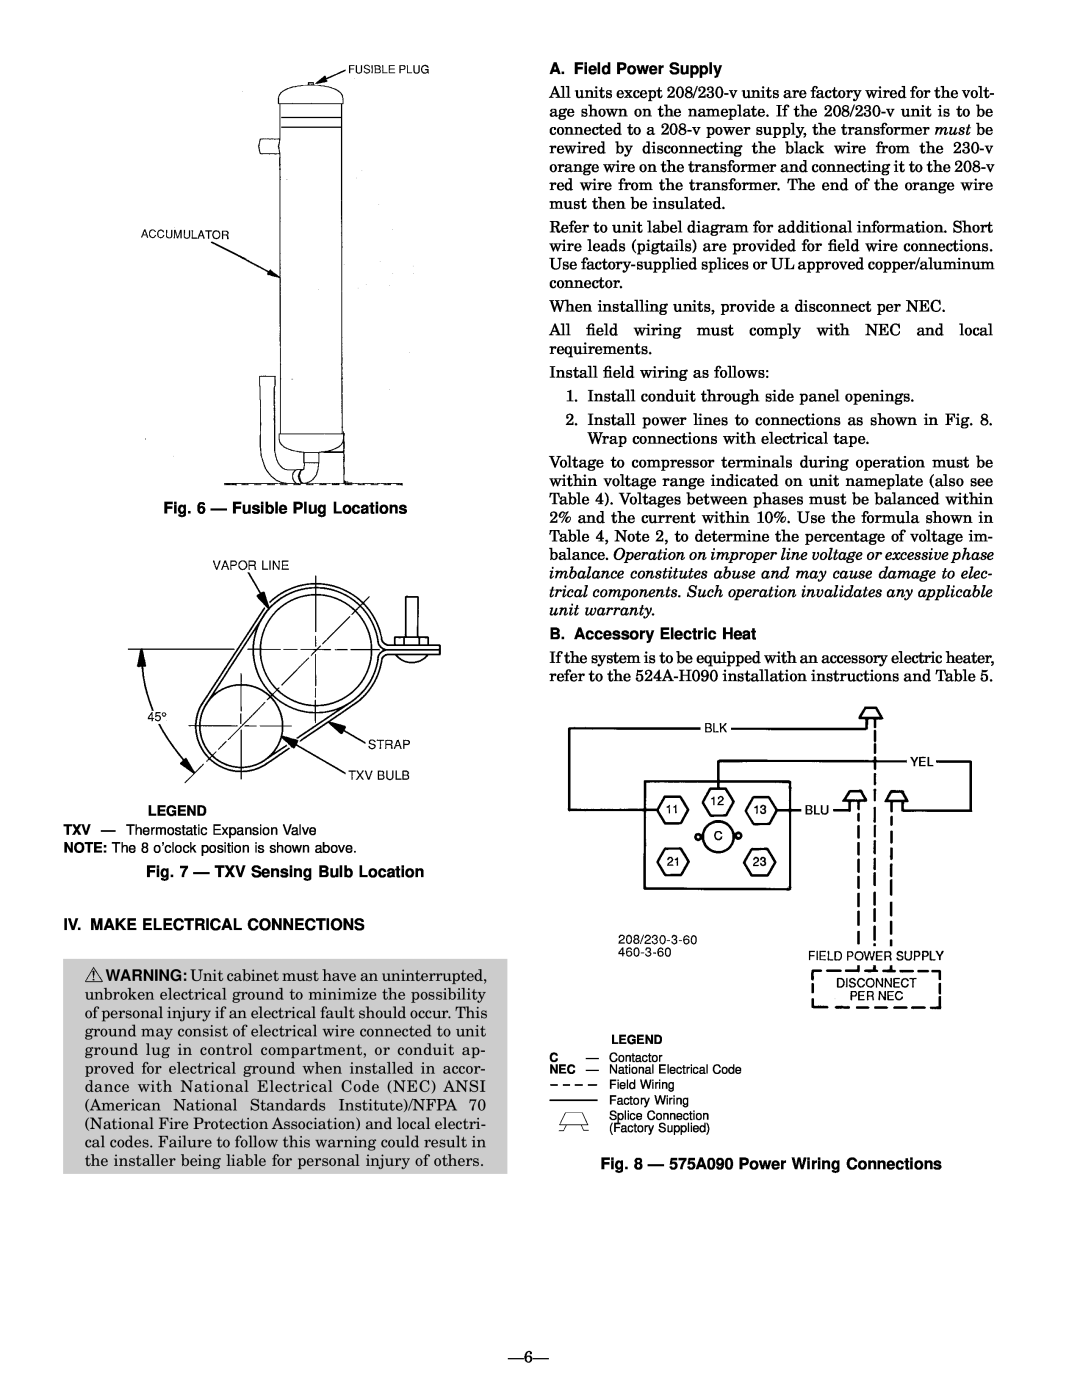 Bryant 575A Ð Fusible Plug Locations, A. Field Power Supply, B. Accessory Electric Heat, Ð TXV Sensing Bulb Location 